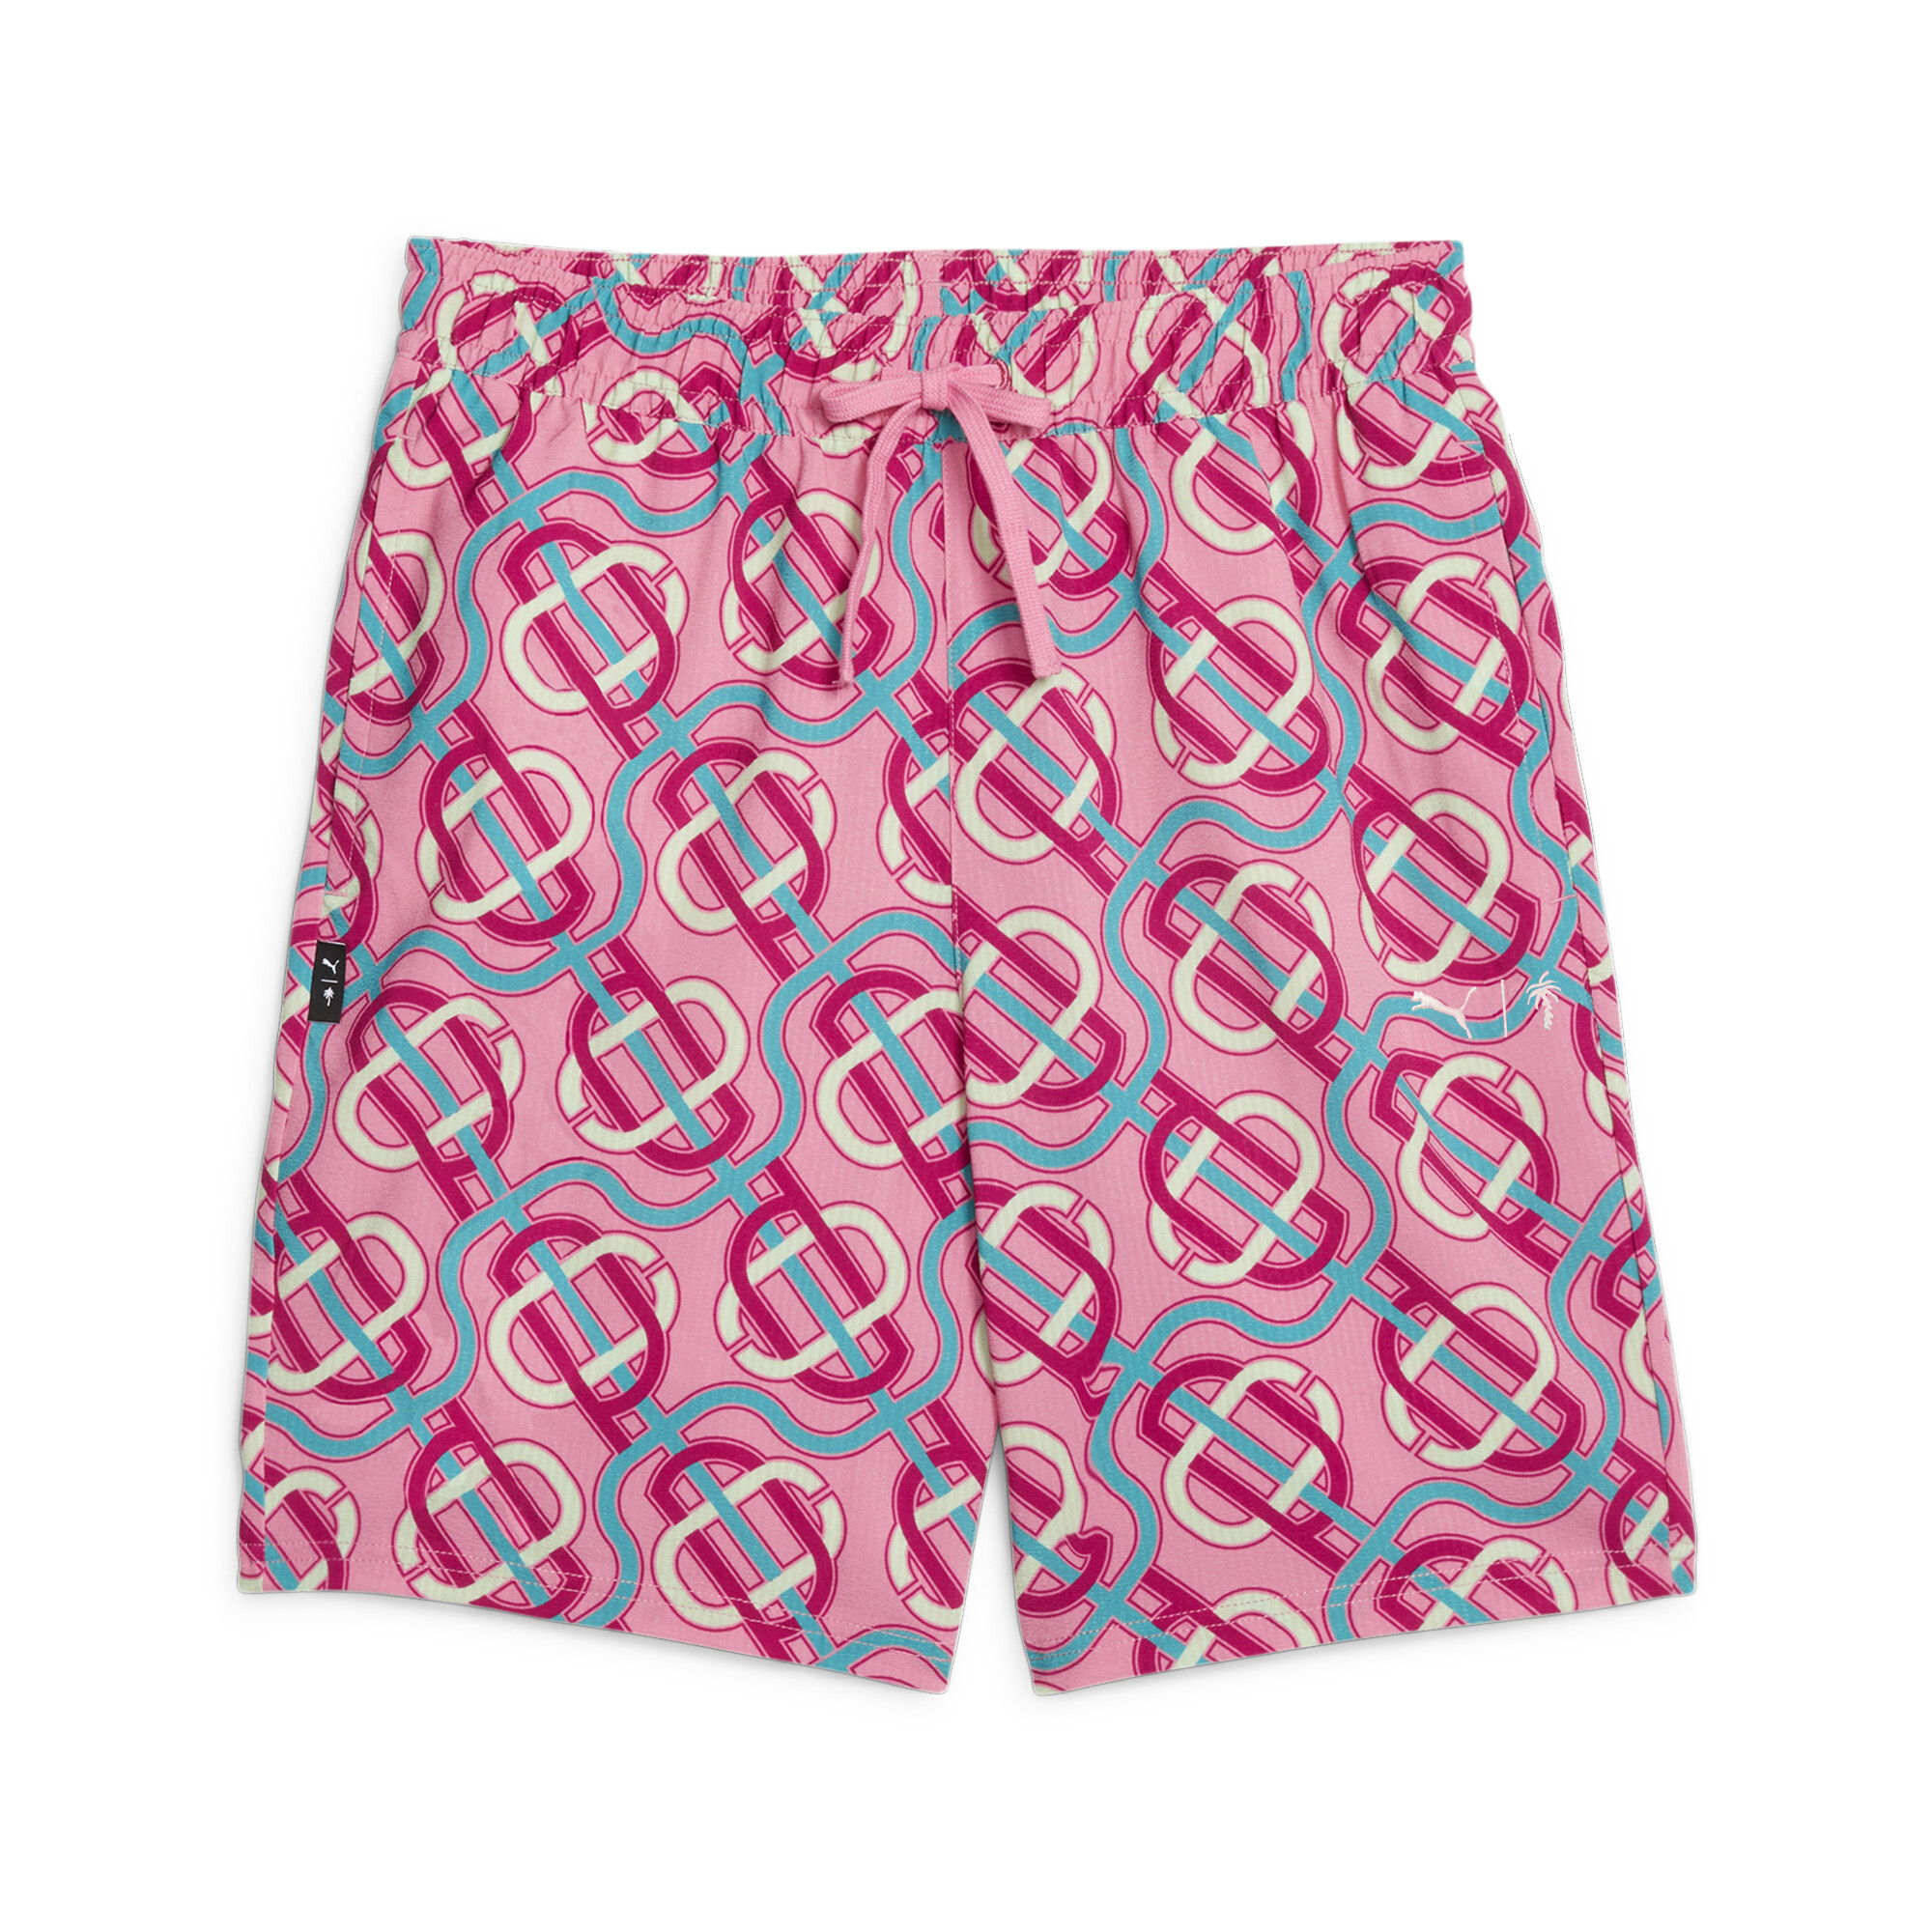 Men's PUMA X PALM TREE CREW Shorts In 70 - Pink, Size 2XL